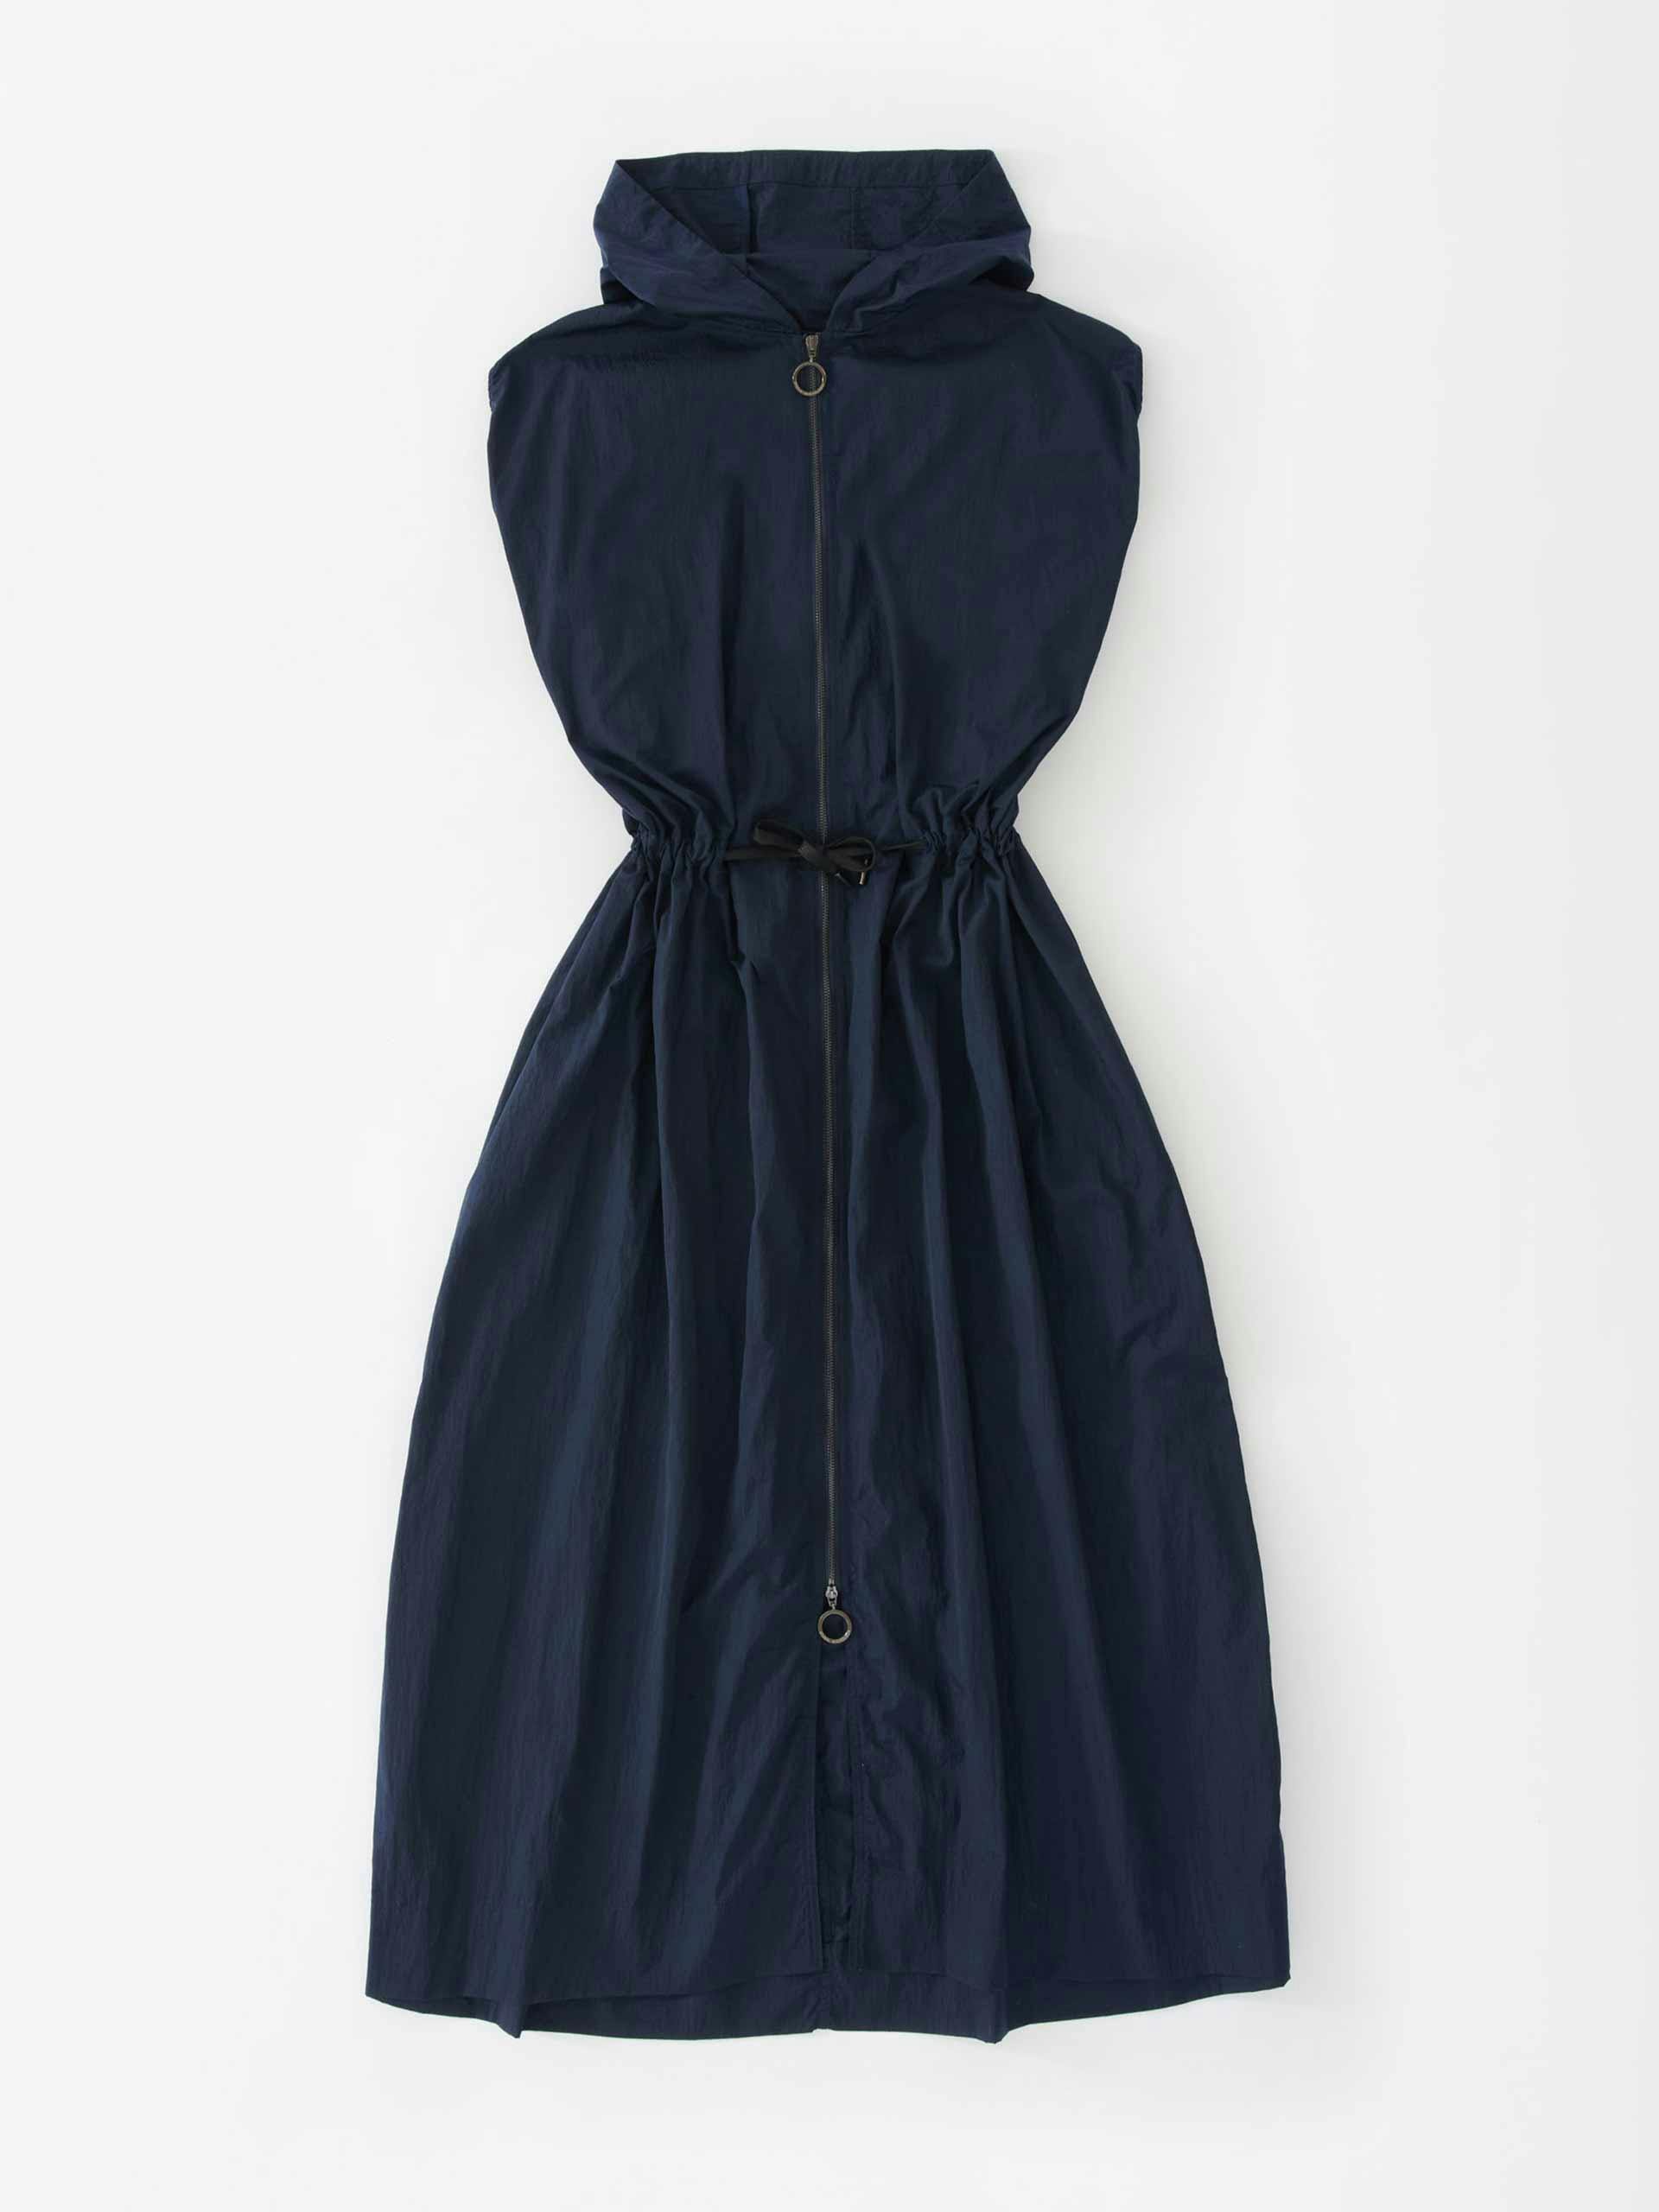 Sleeveless hooded dress